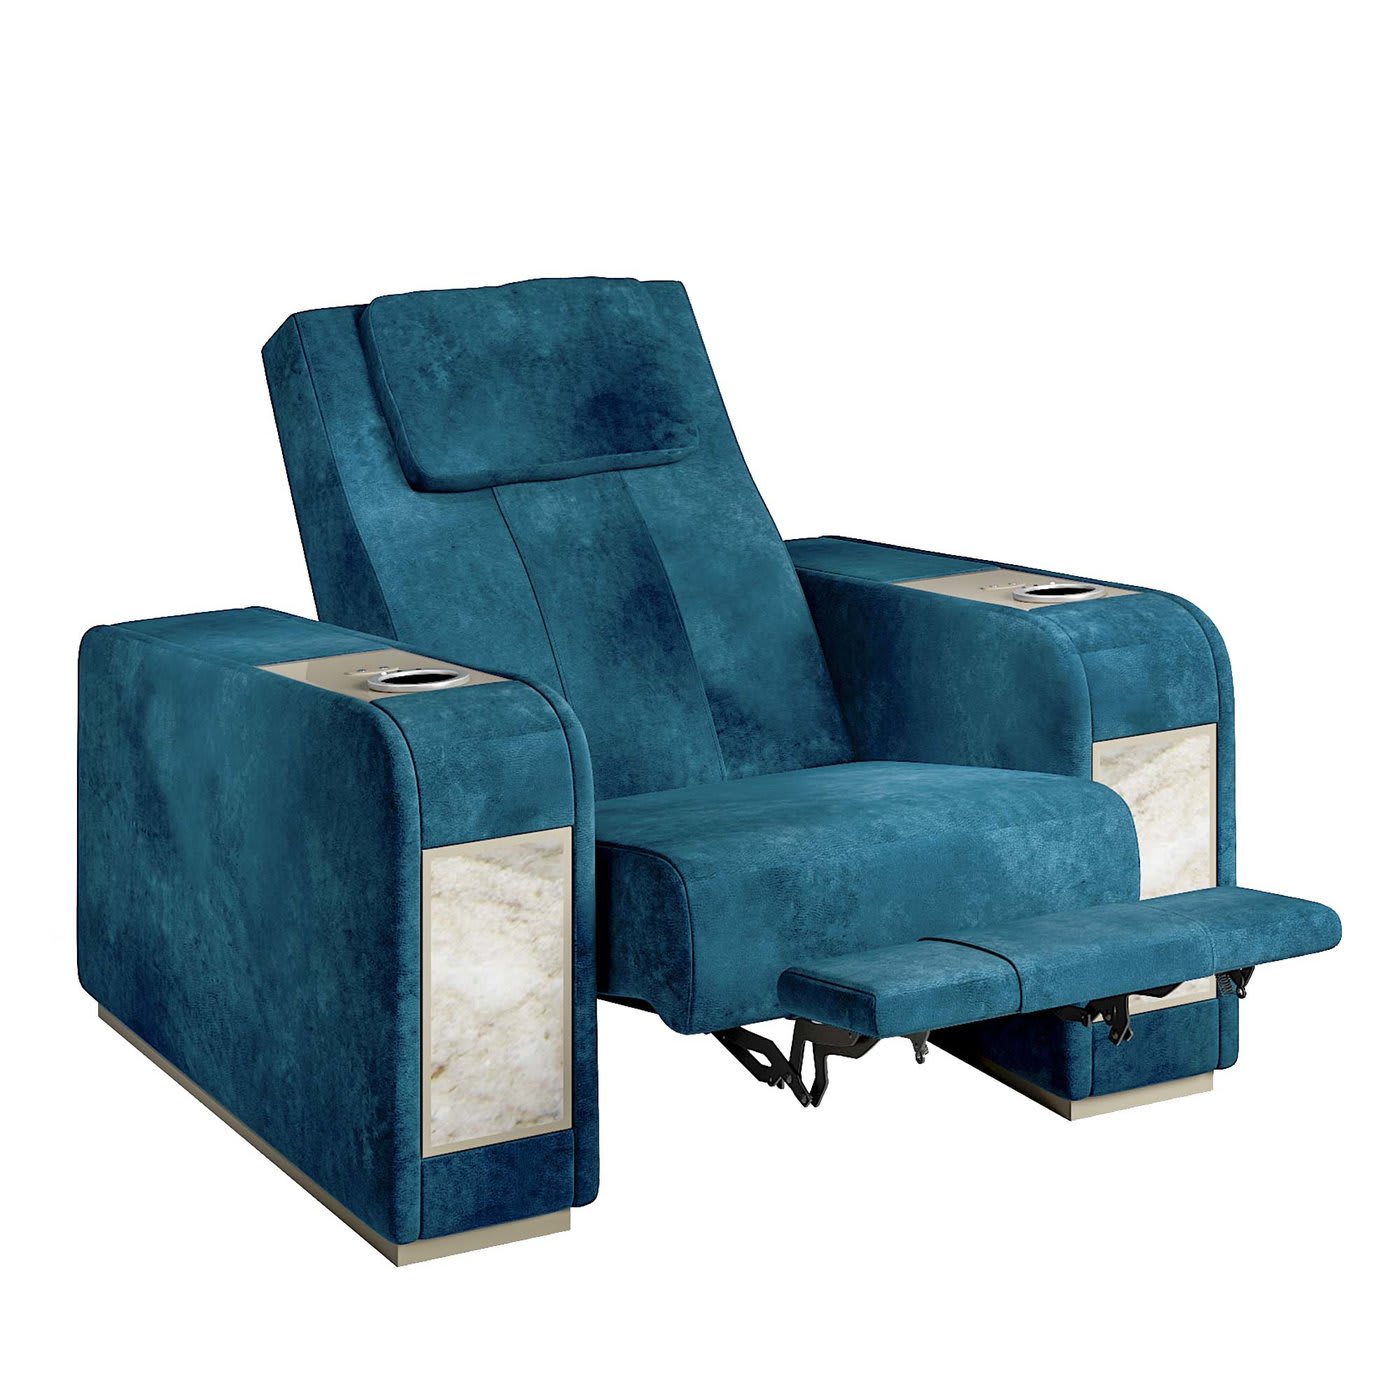 Comfort Blue home theater seat by Pino Vismara - Vismara